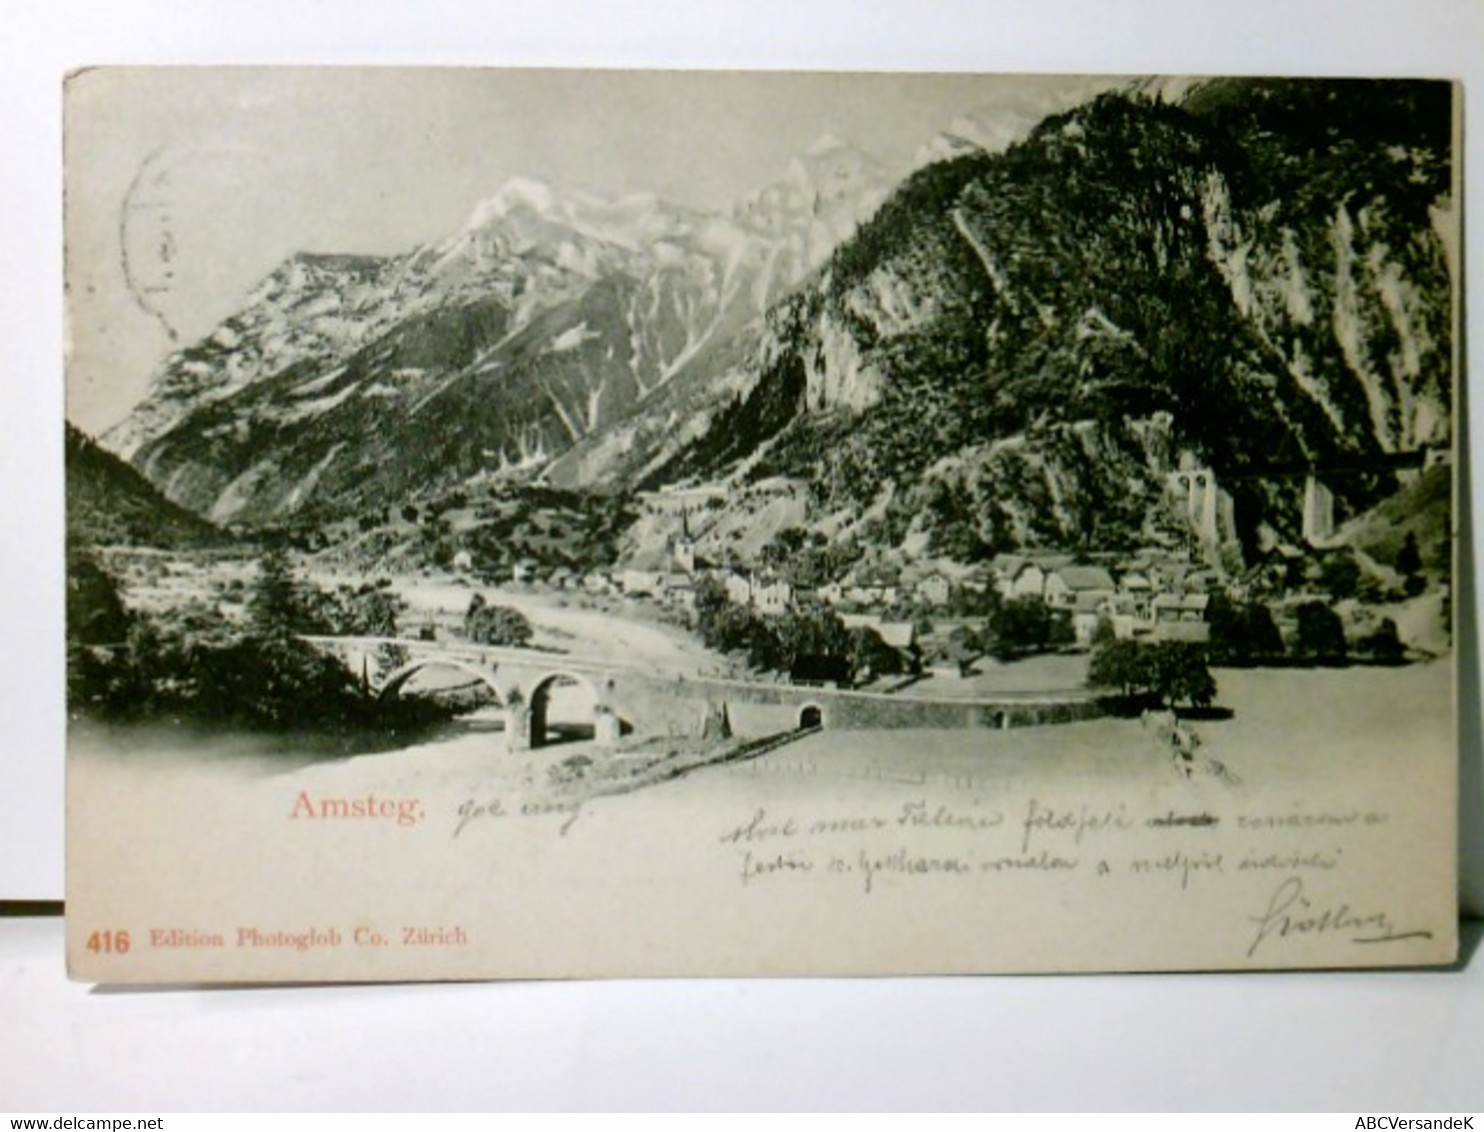 Amsteg. Alte Ansichtskarte / Lithographie S/w. Gel. 1902. Blick über Brücke, Ort U. Umland Auf Gebirgsmassive. - Steg